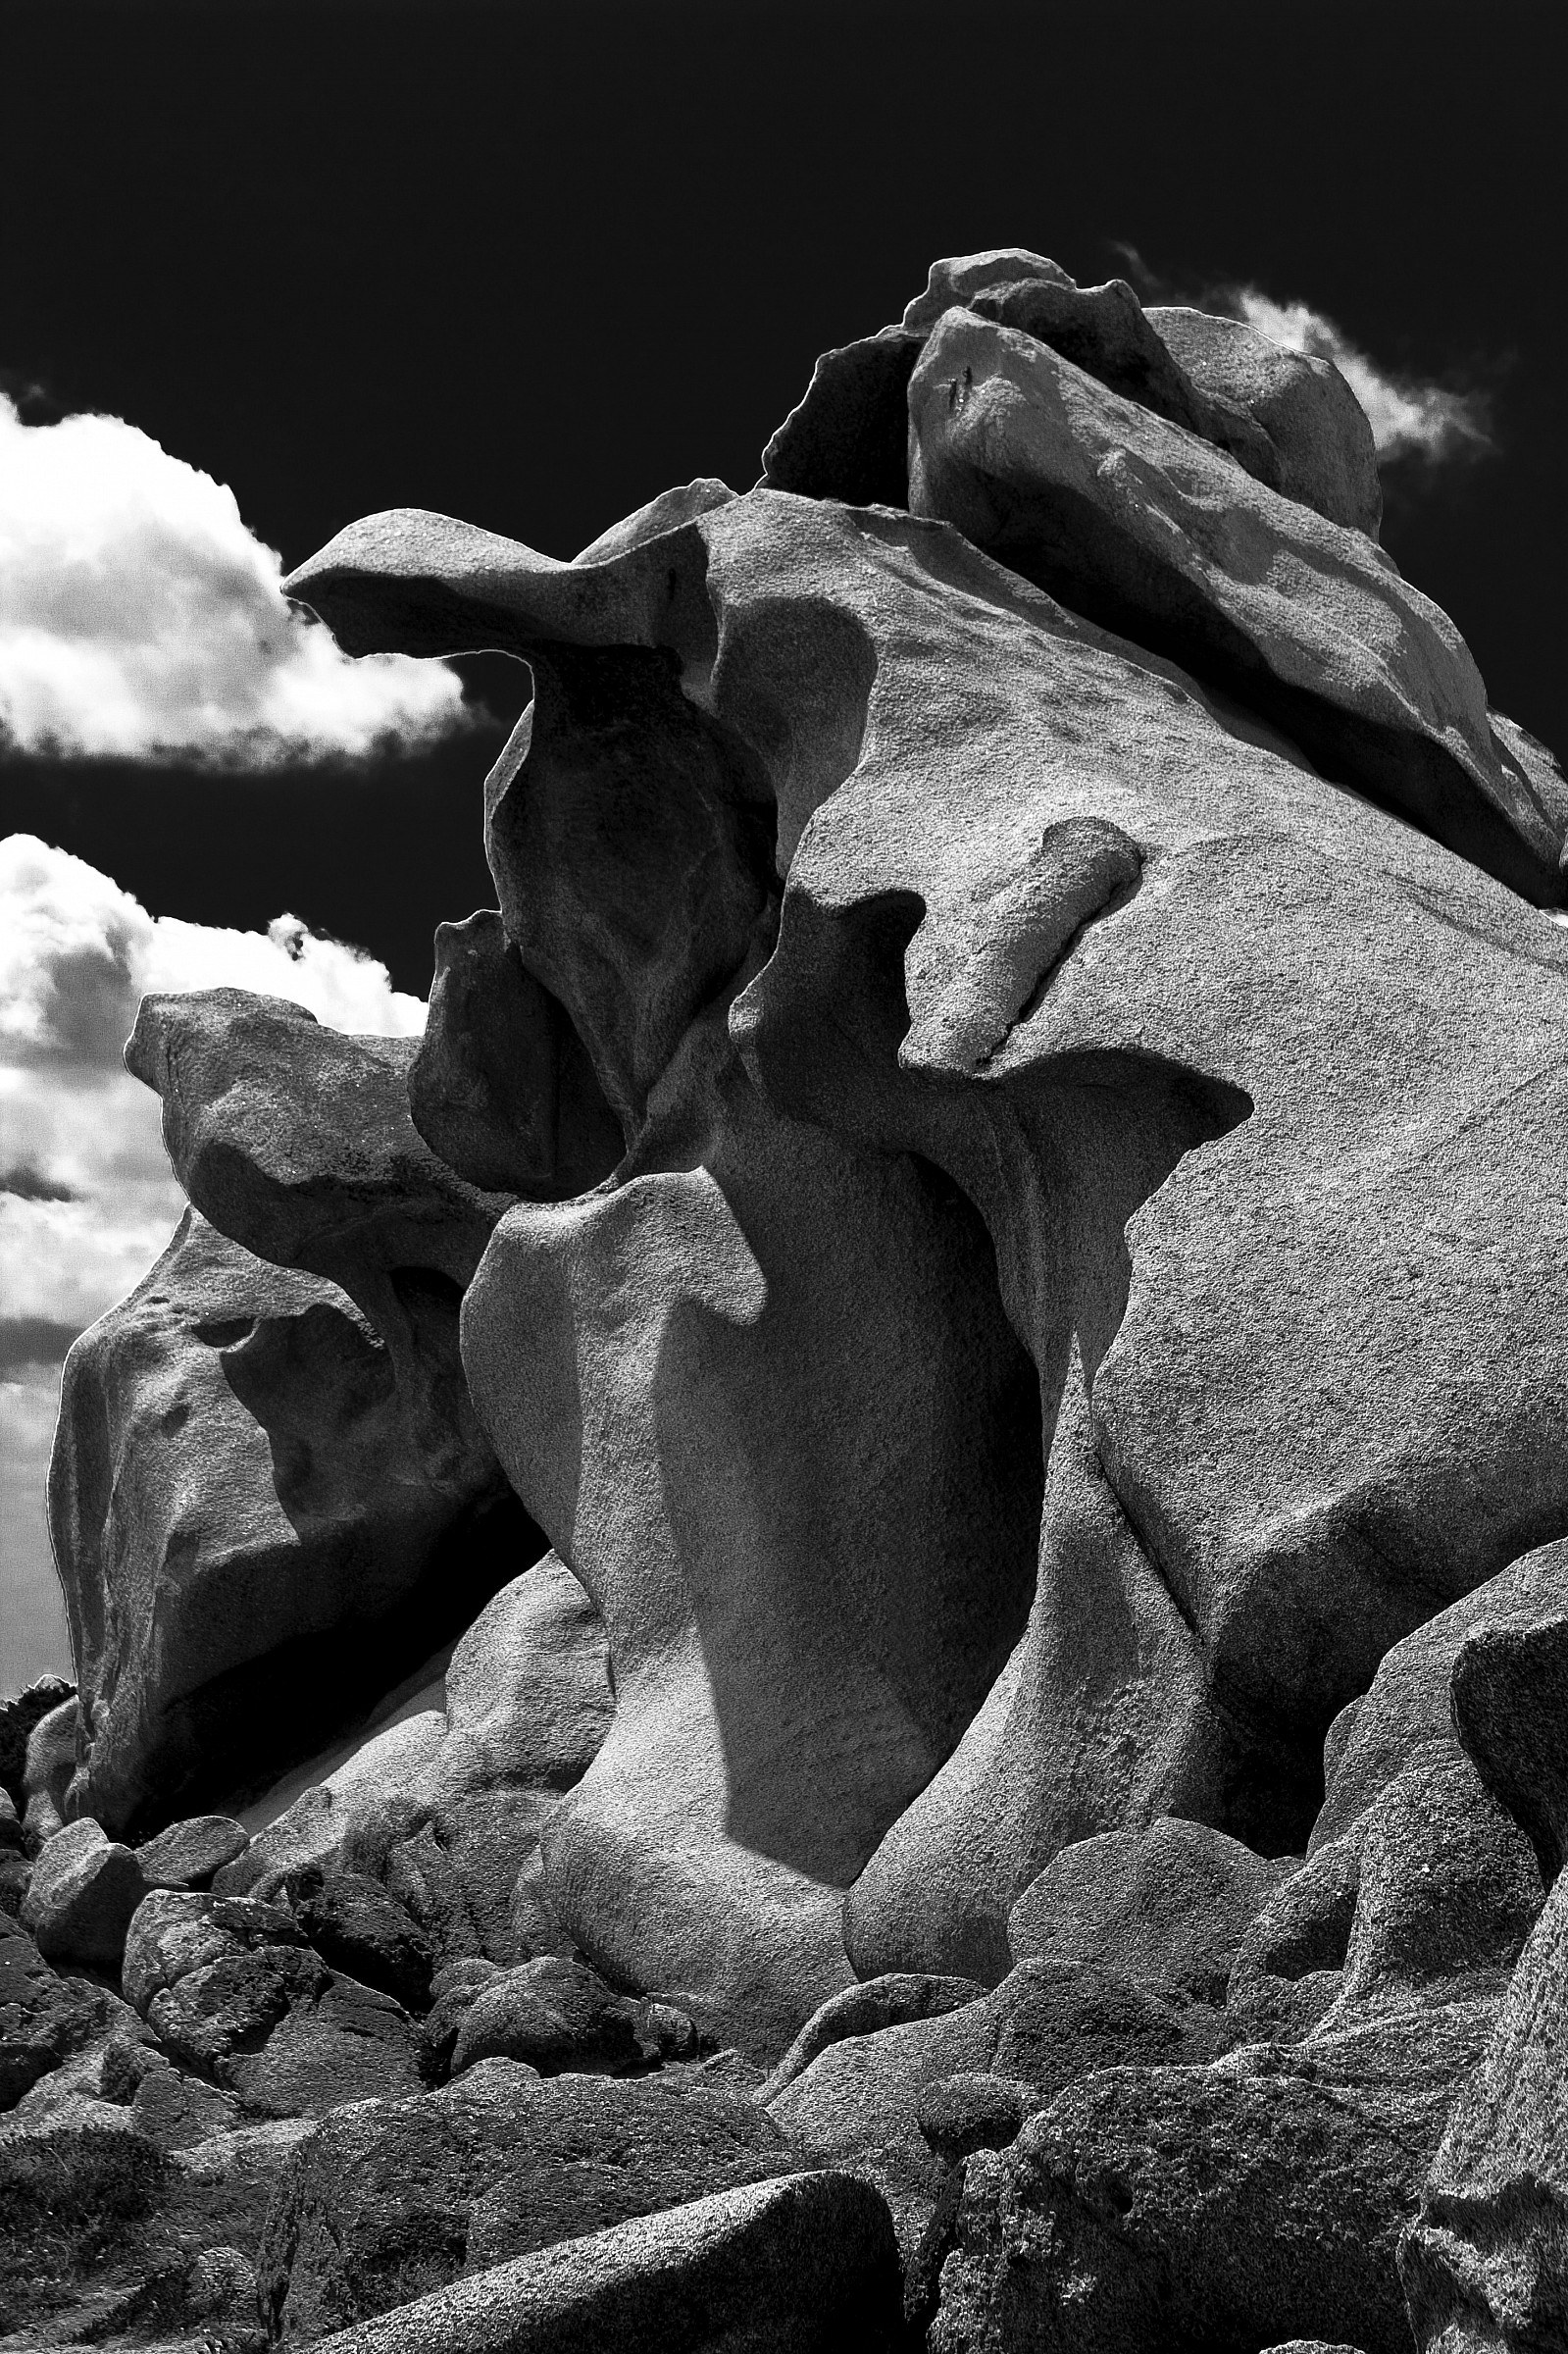 the wind sculpts...